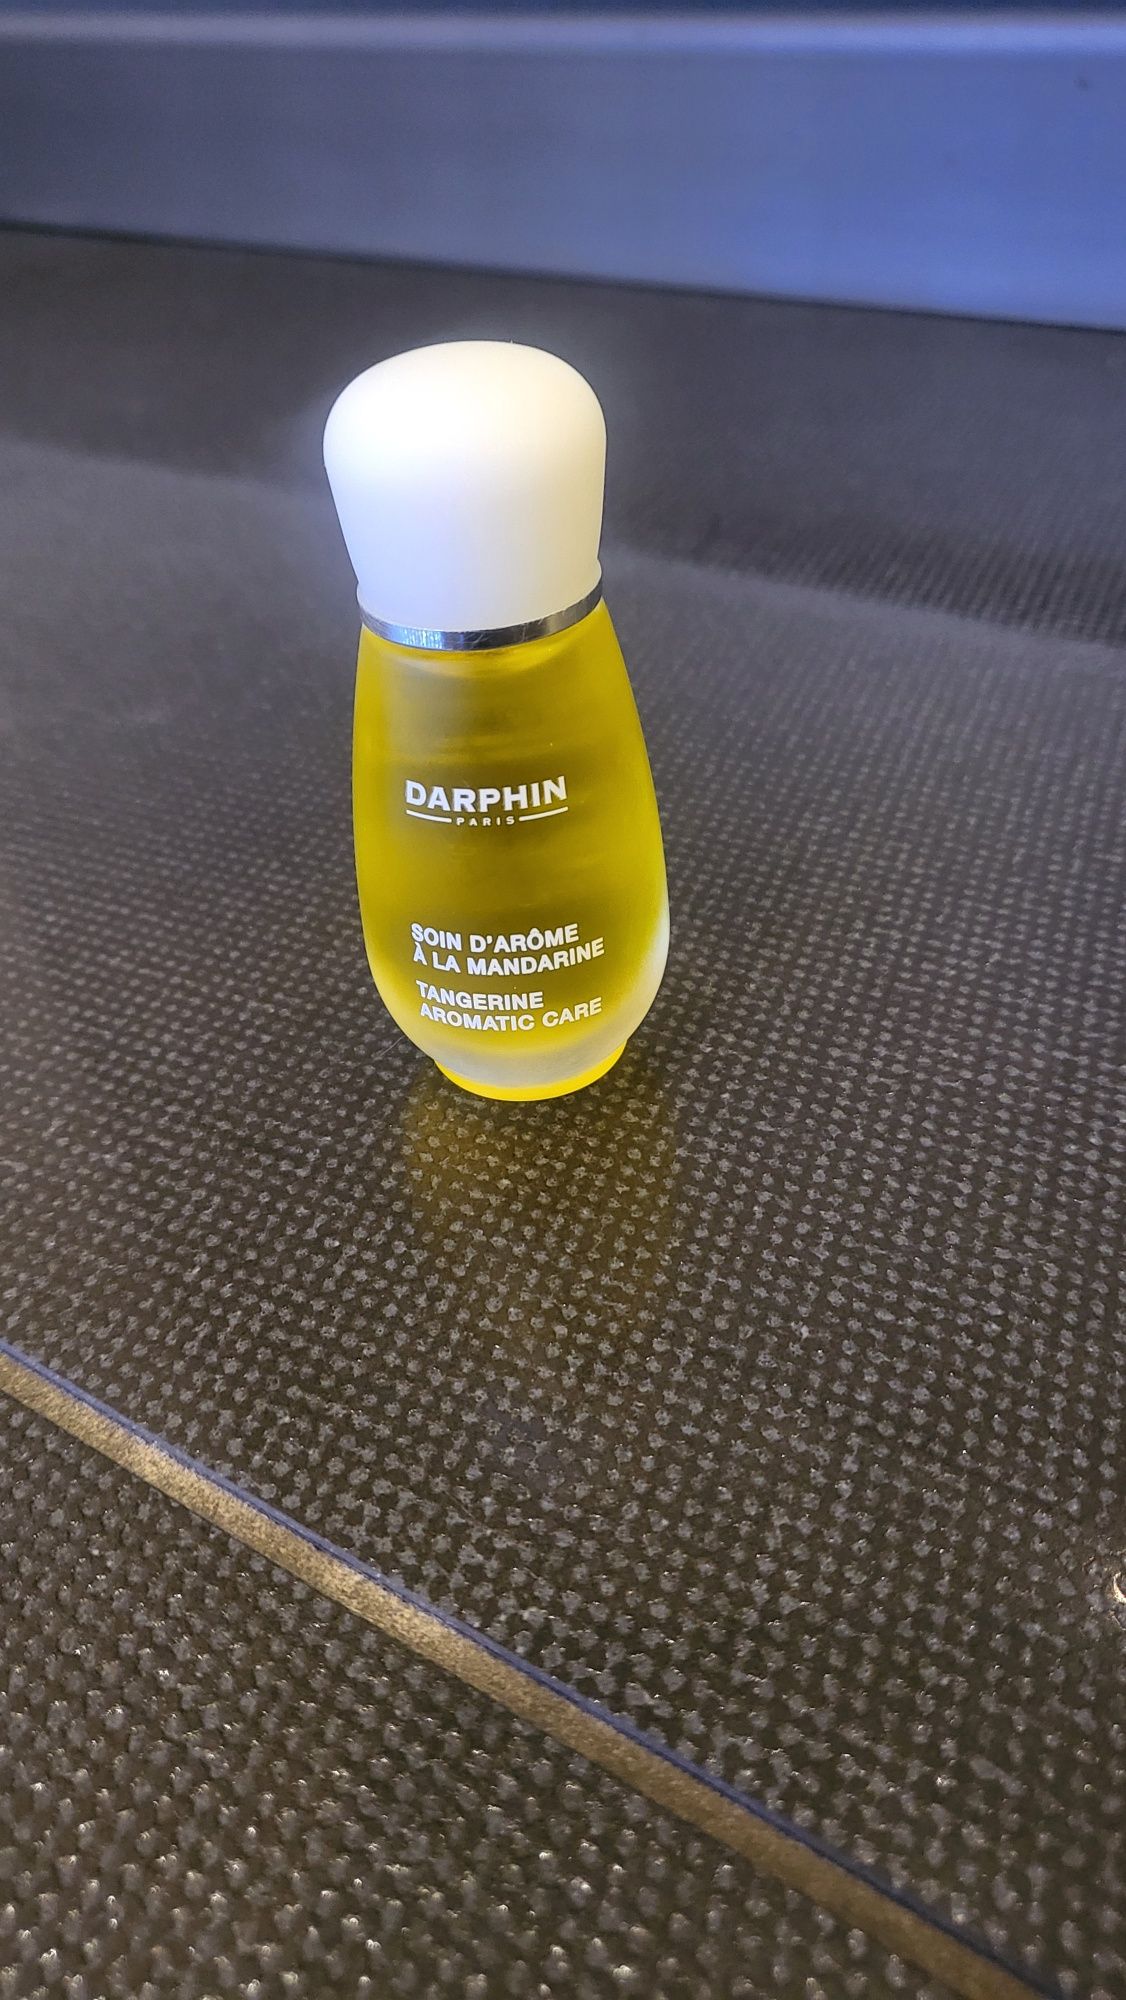 DARRHIN  - Tdngerine care- натурално масло против бръчки